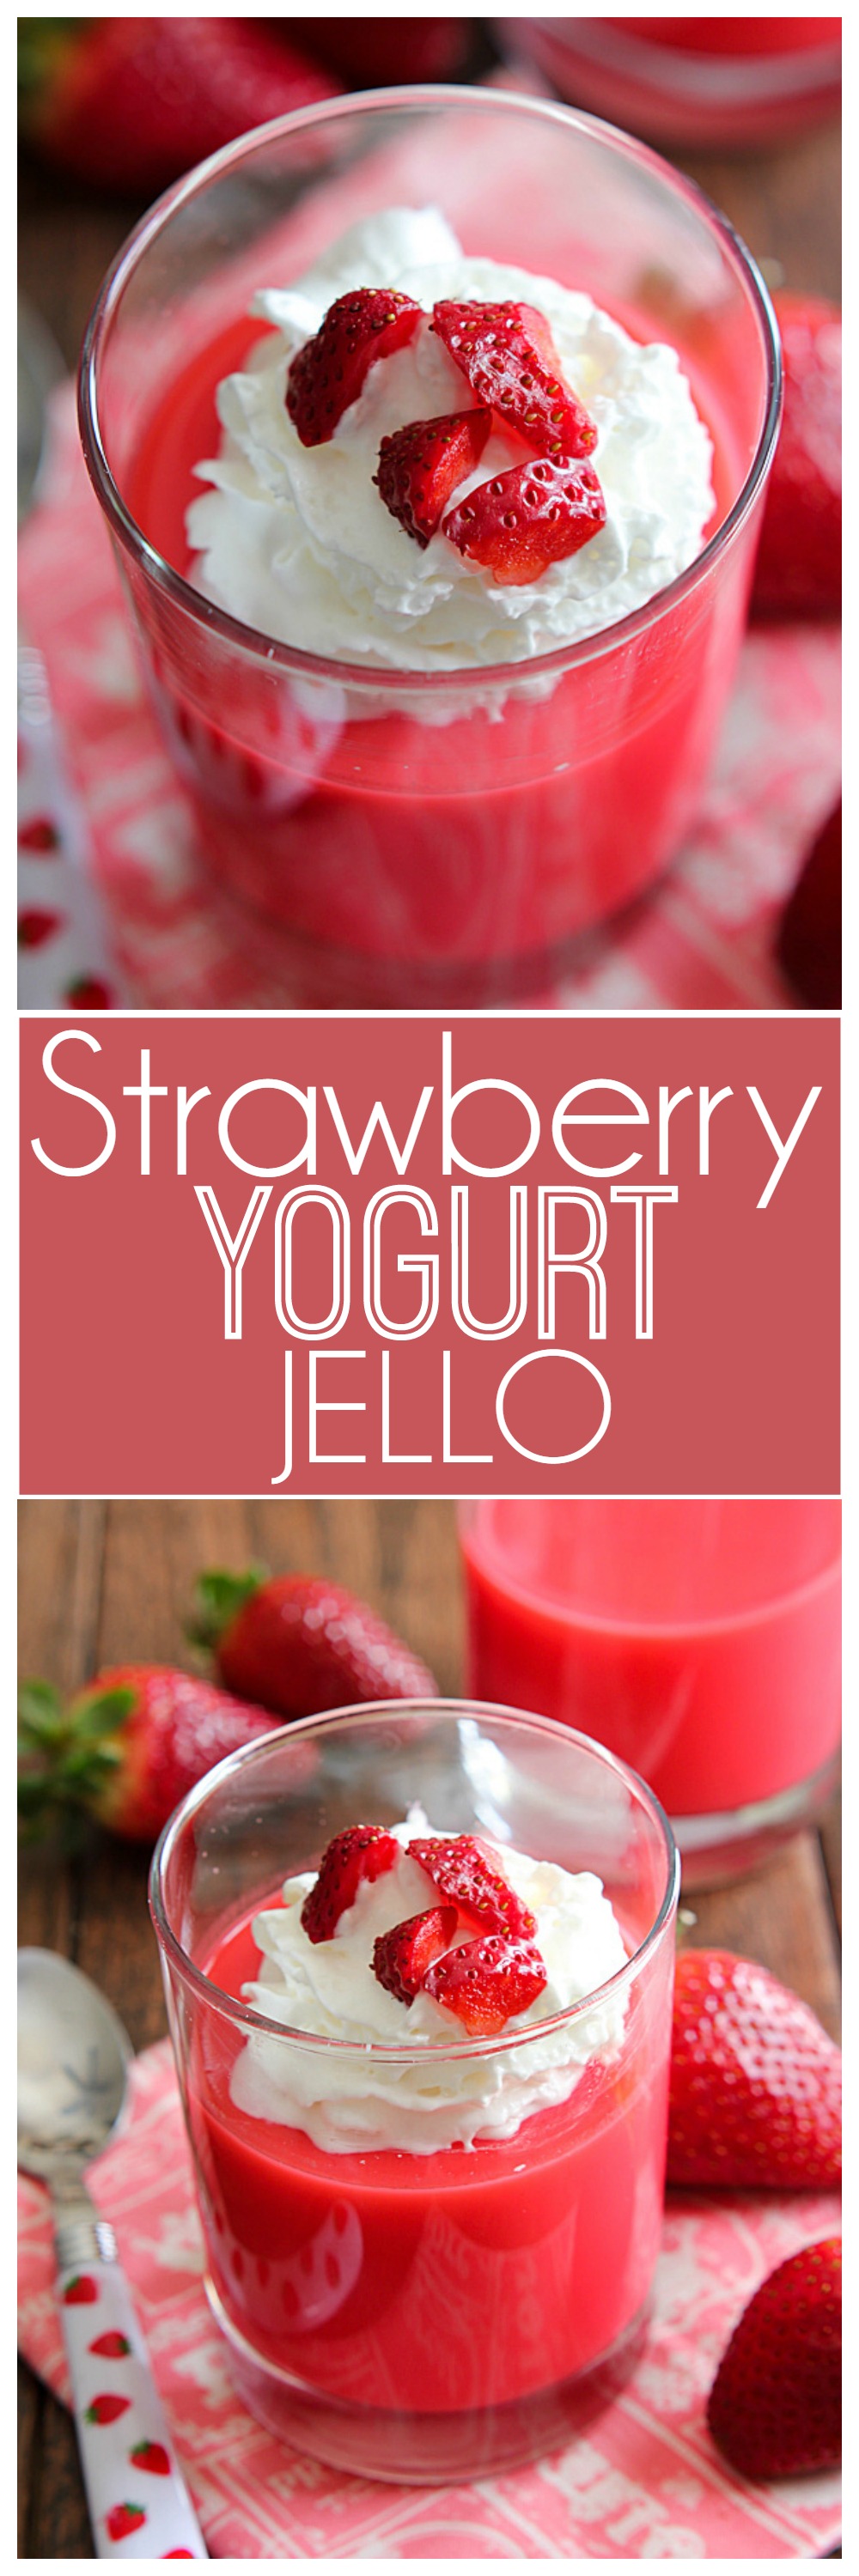 Strawberry Yogurt Jello | Mandy's Recipe Box